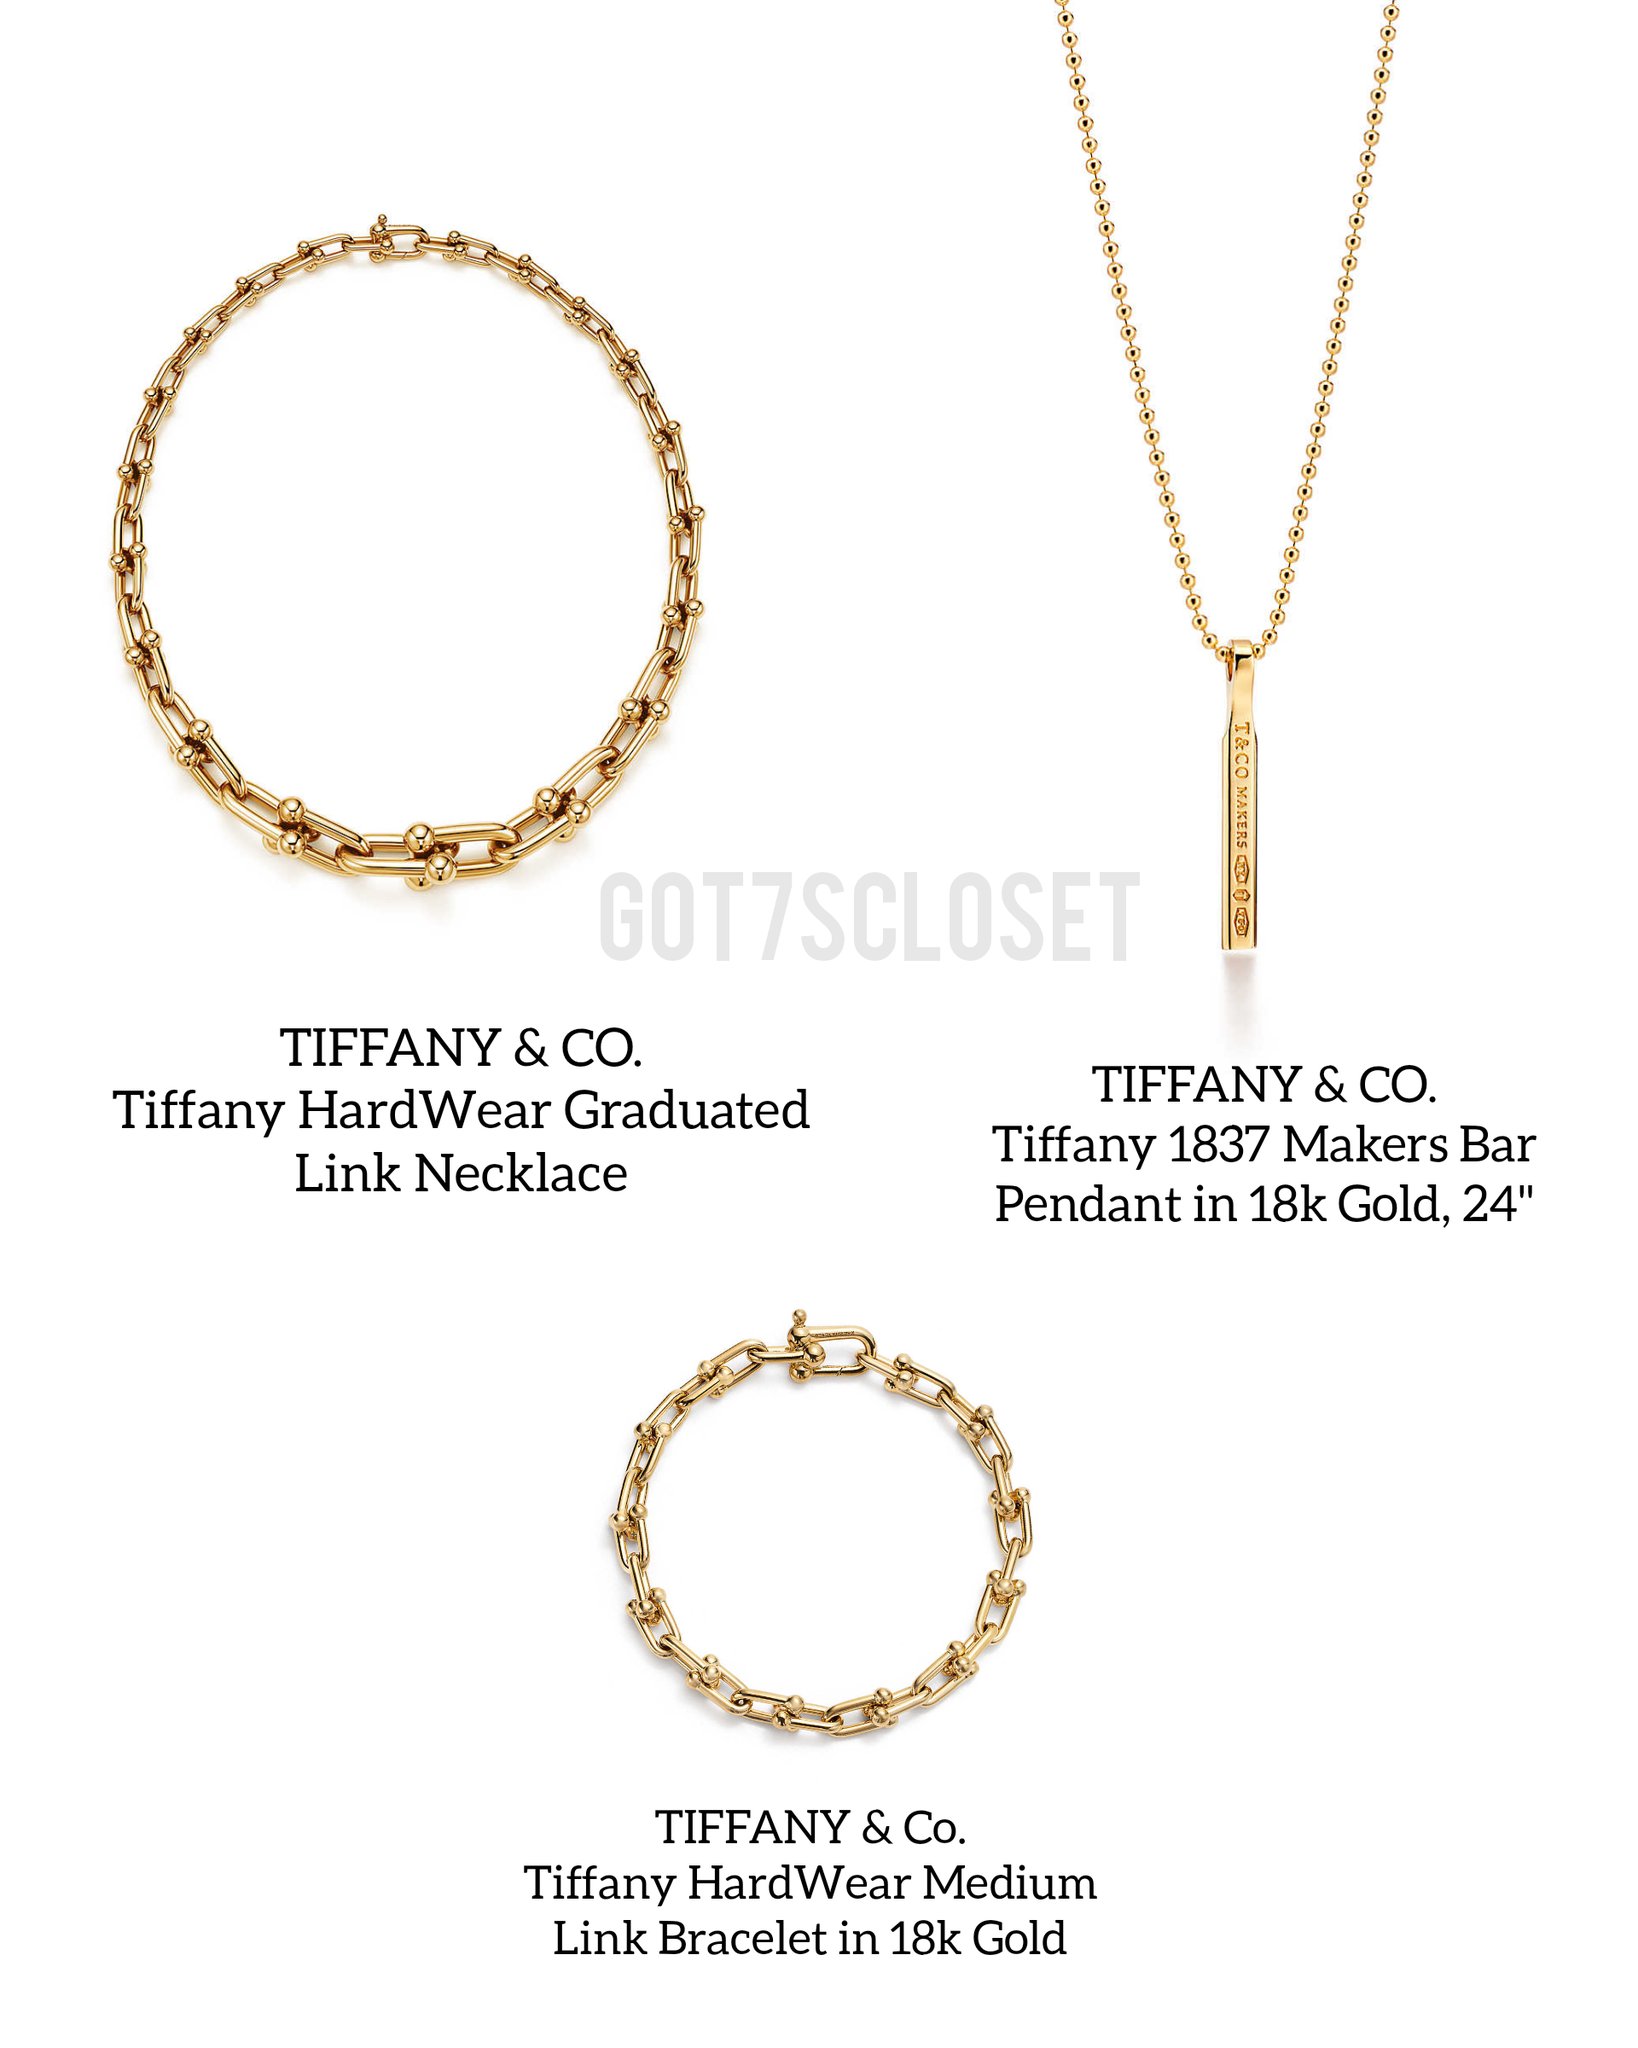 tiffany hardwear graduated link necklace